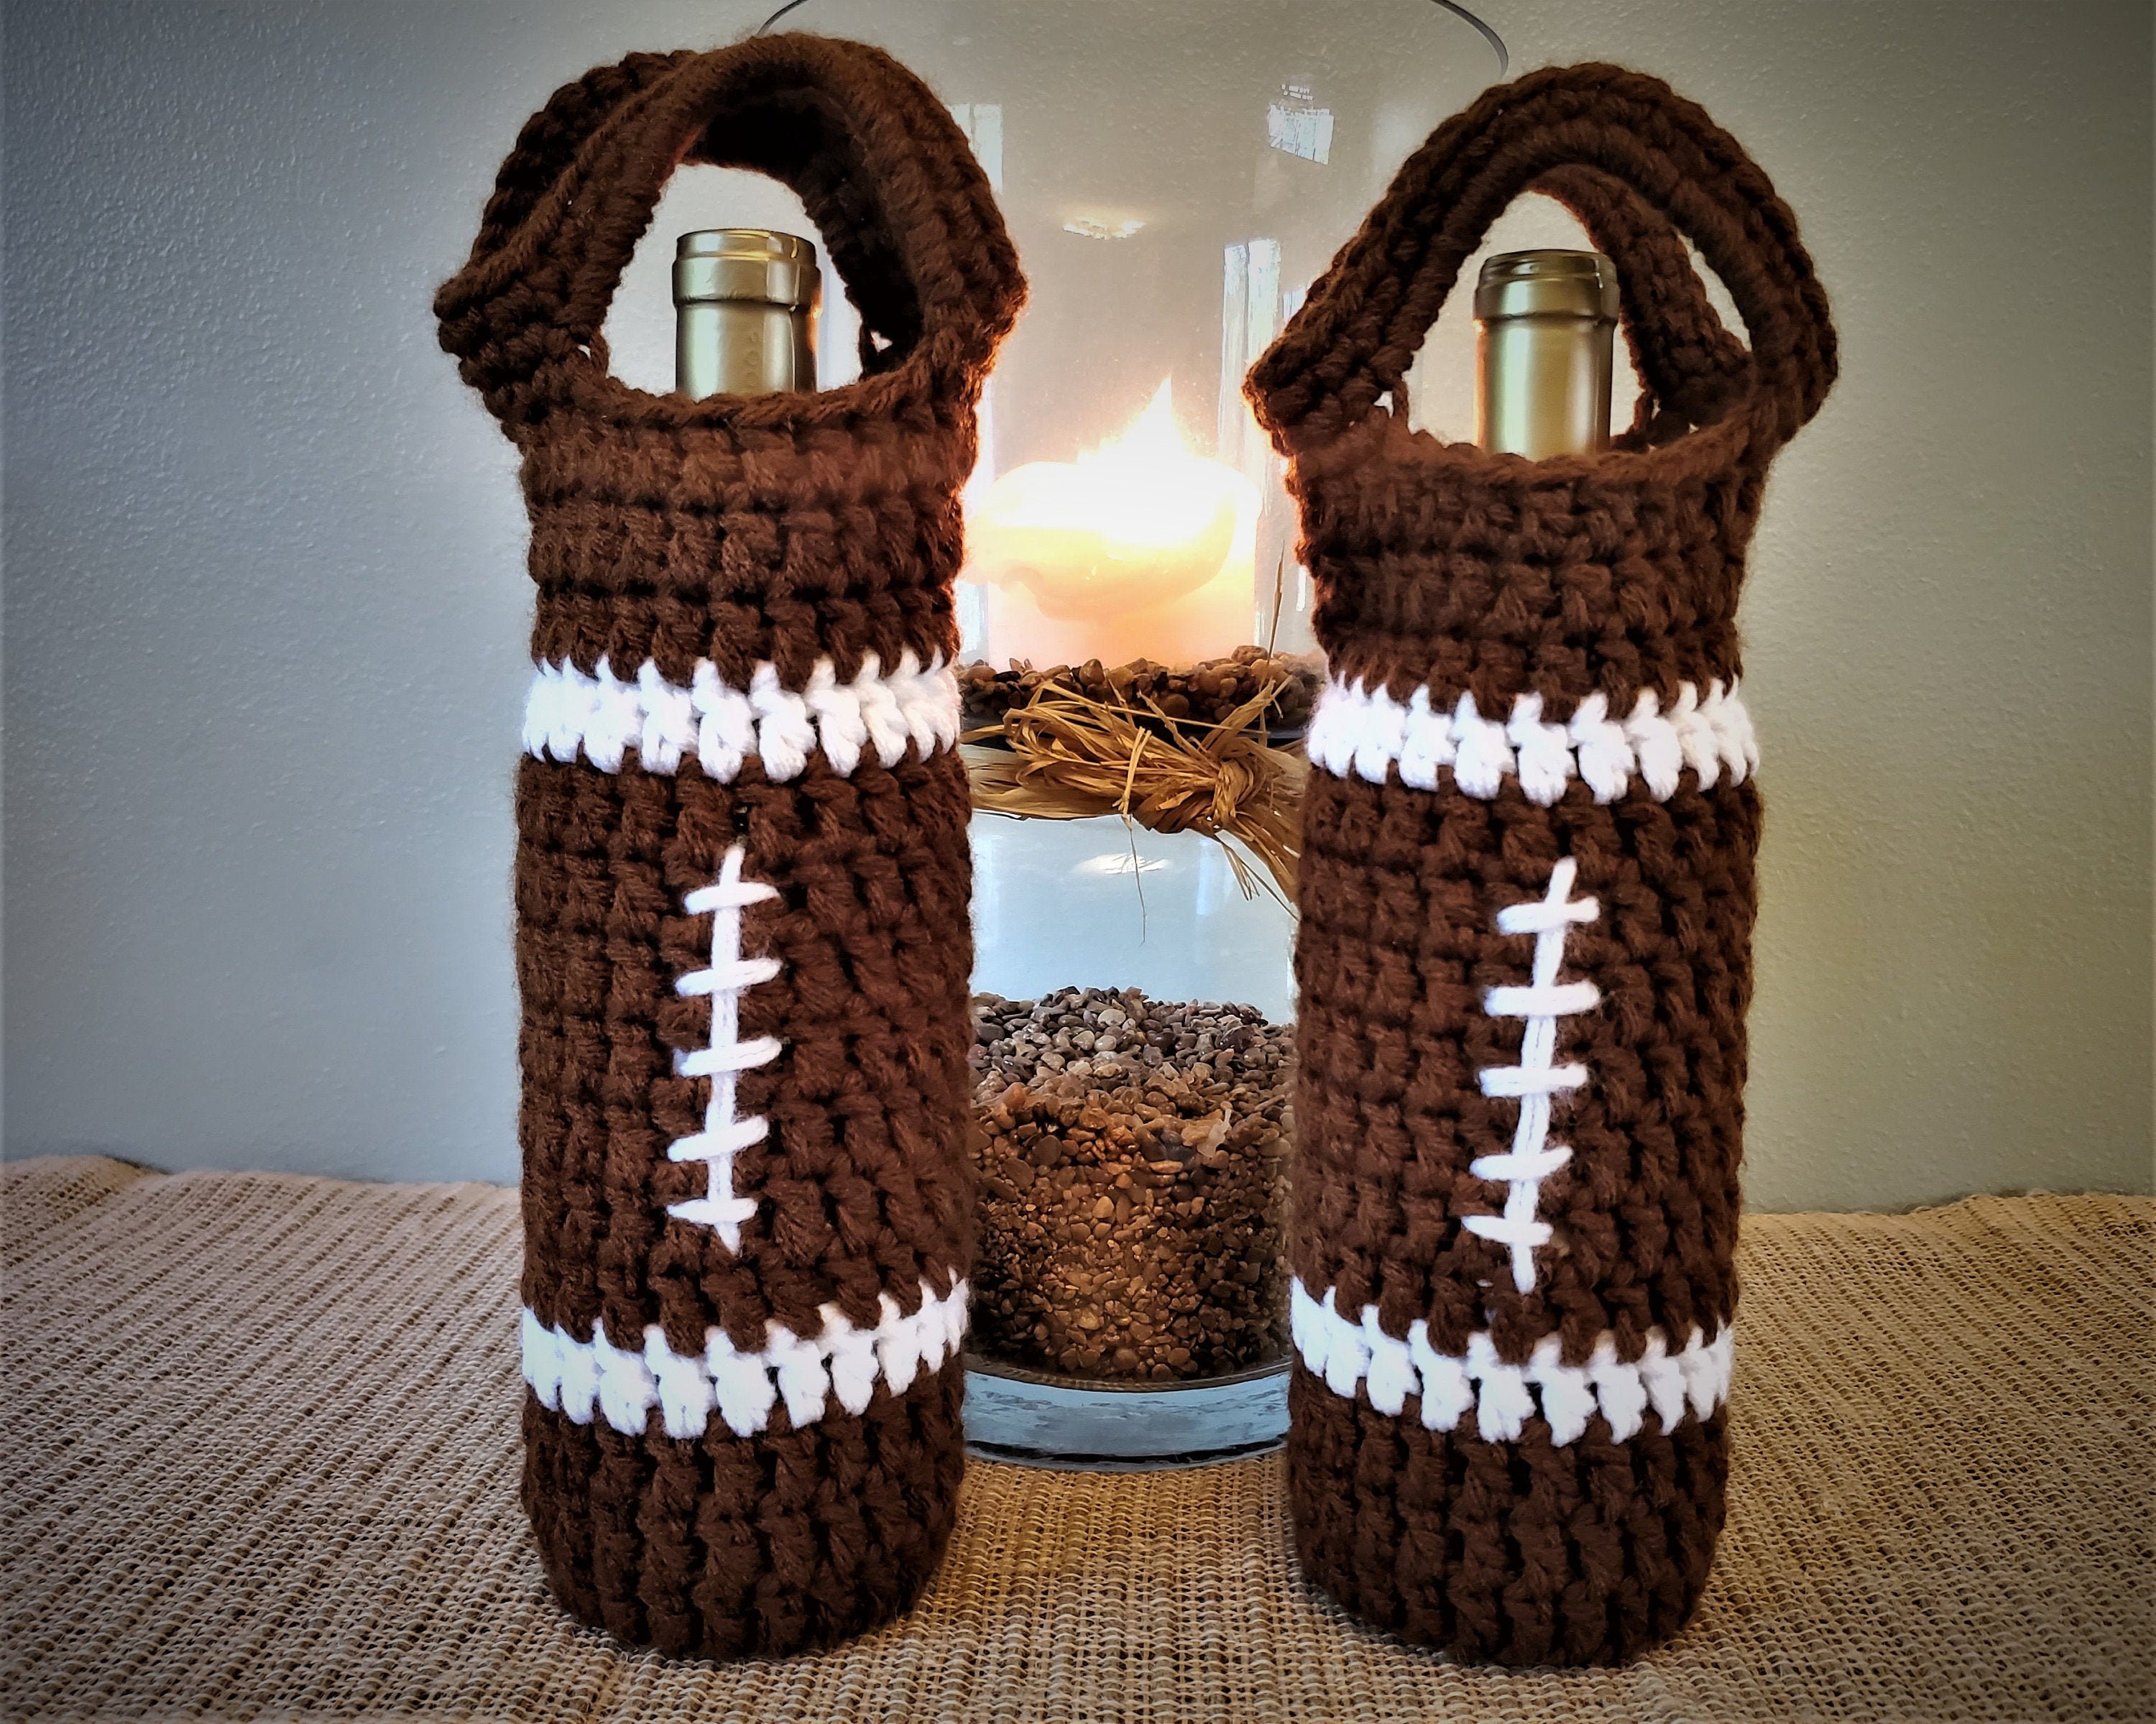 Football Beer Cozy Free Crochet Pattern - Right Handed 